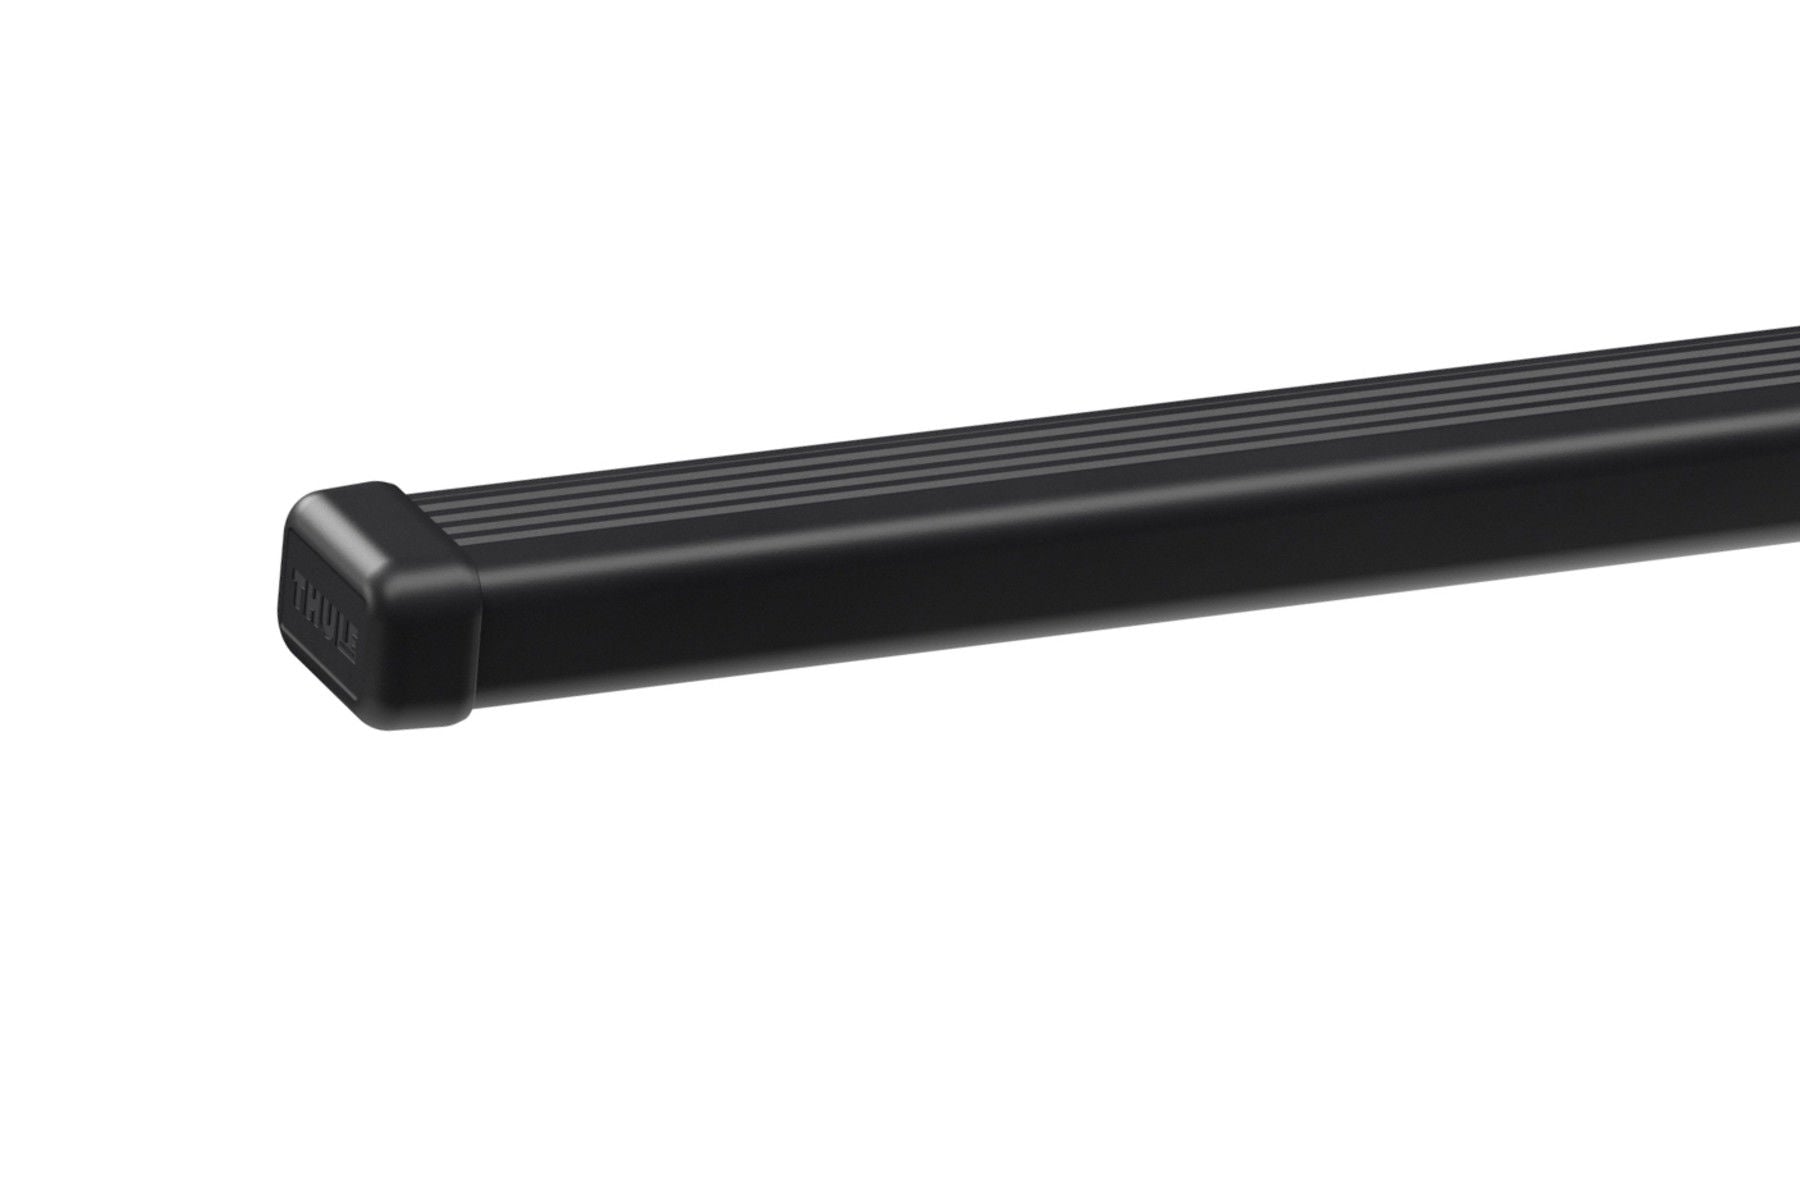 Thule 712400 - (2) Black Evo SquareBar Roof Bars (135 cm / 53")